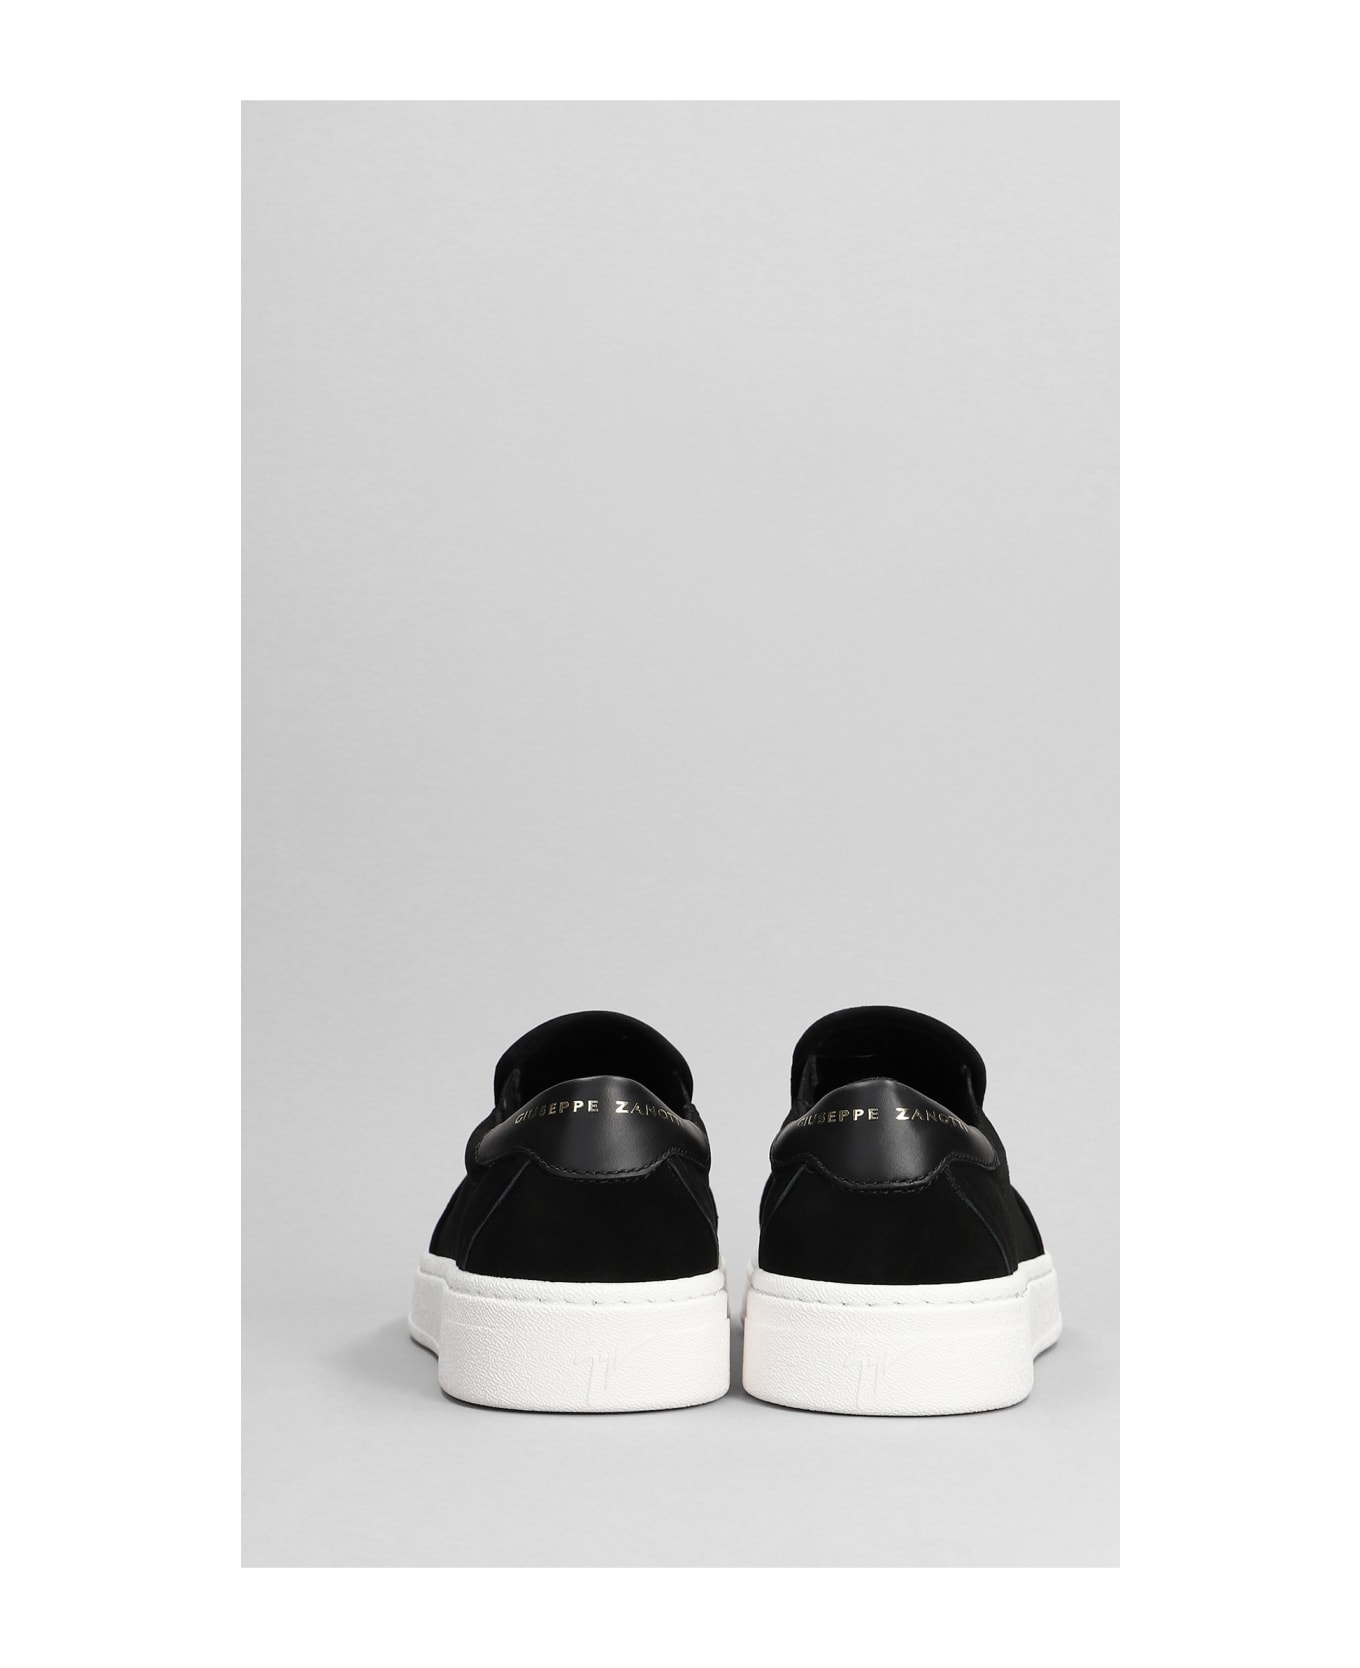 Giuseppe Zanotti Sneakers In Black Suede - black